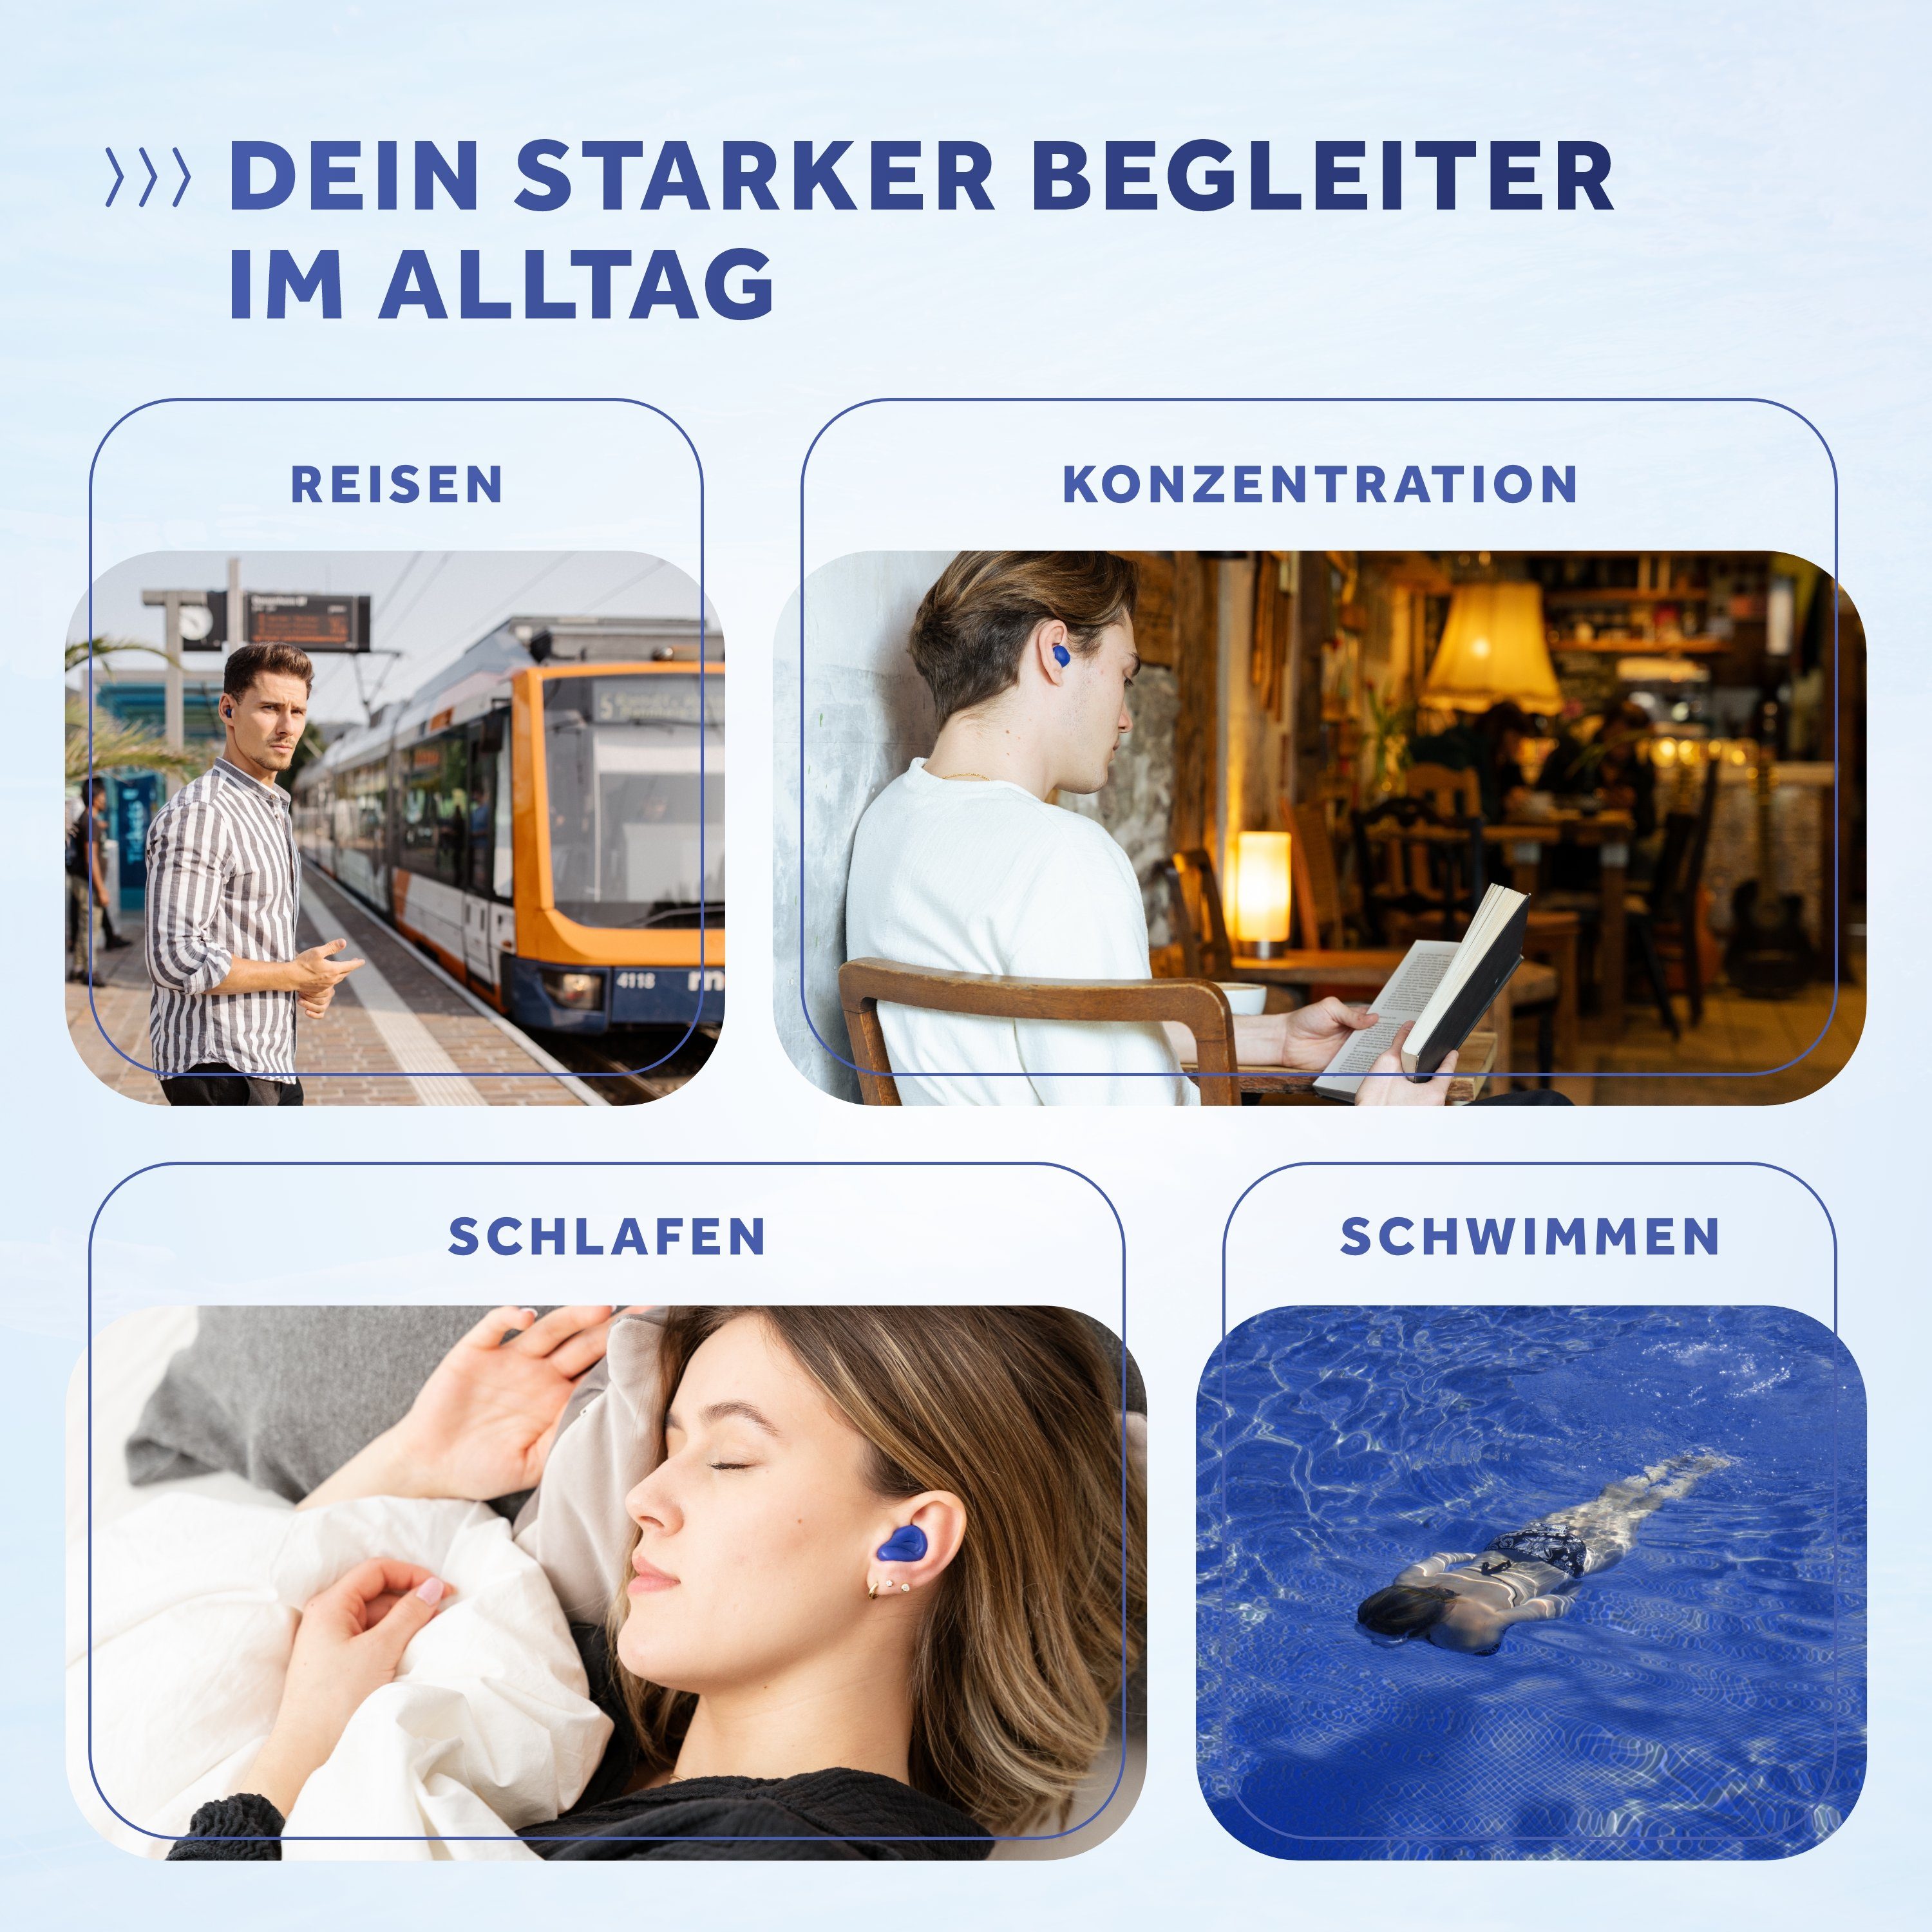 SCHALLWERK Silikon 12 Gehörschutzstöpsel Schallwerk – ® Unterstützung Ohrenstöpsel Soft+, optimale